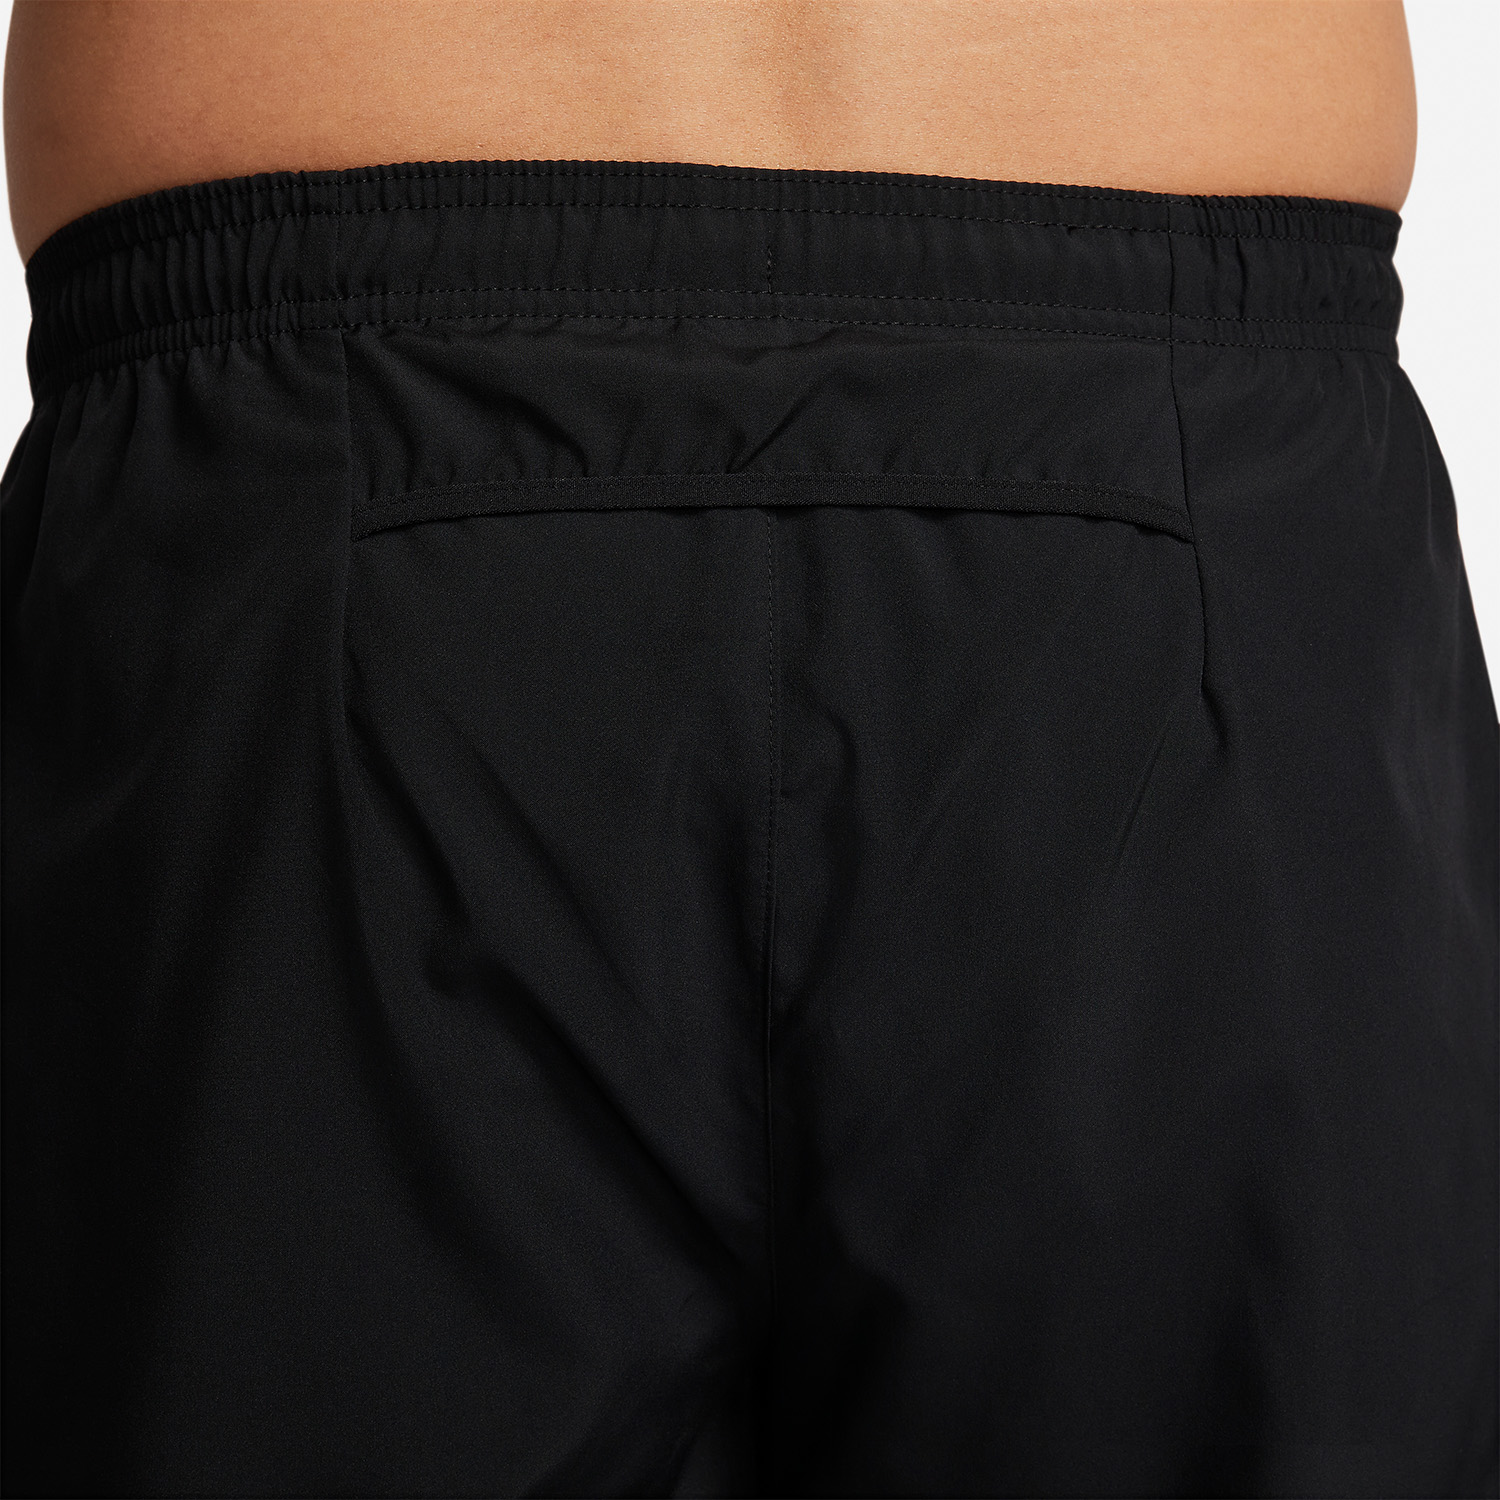 Nike Dri-FIT Swoosh Men's Running Pants - Black